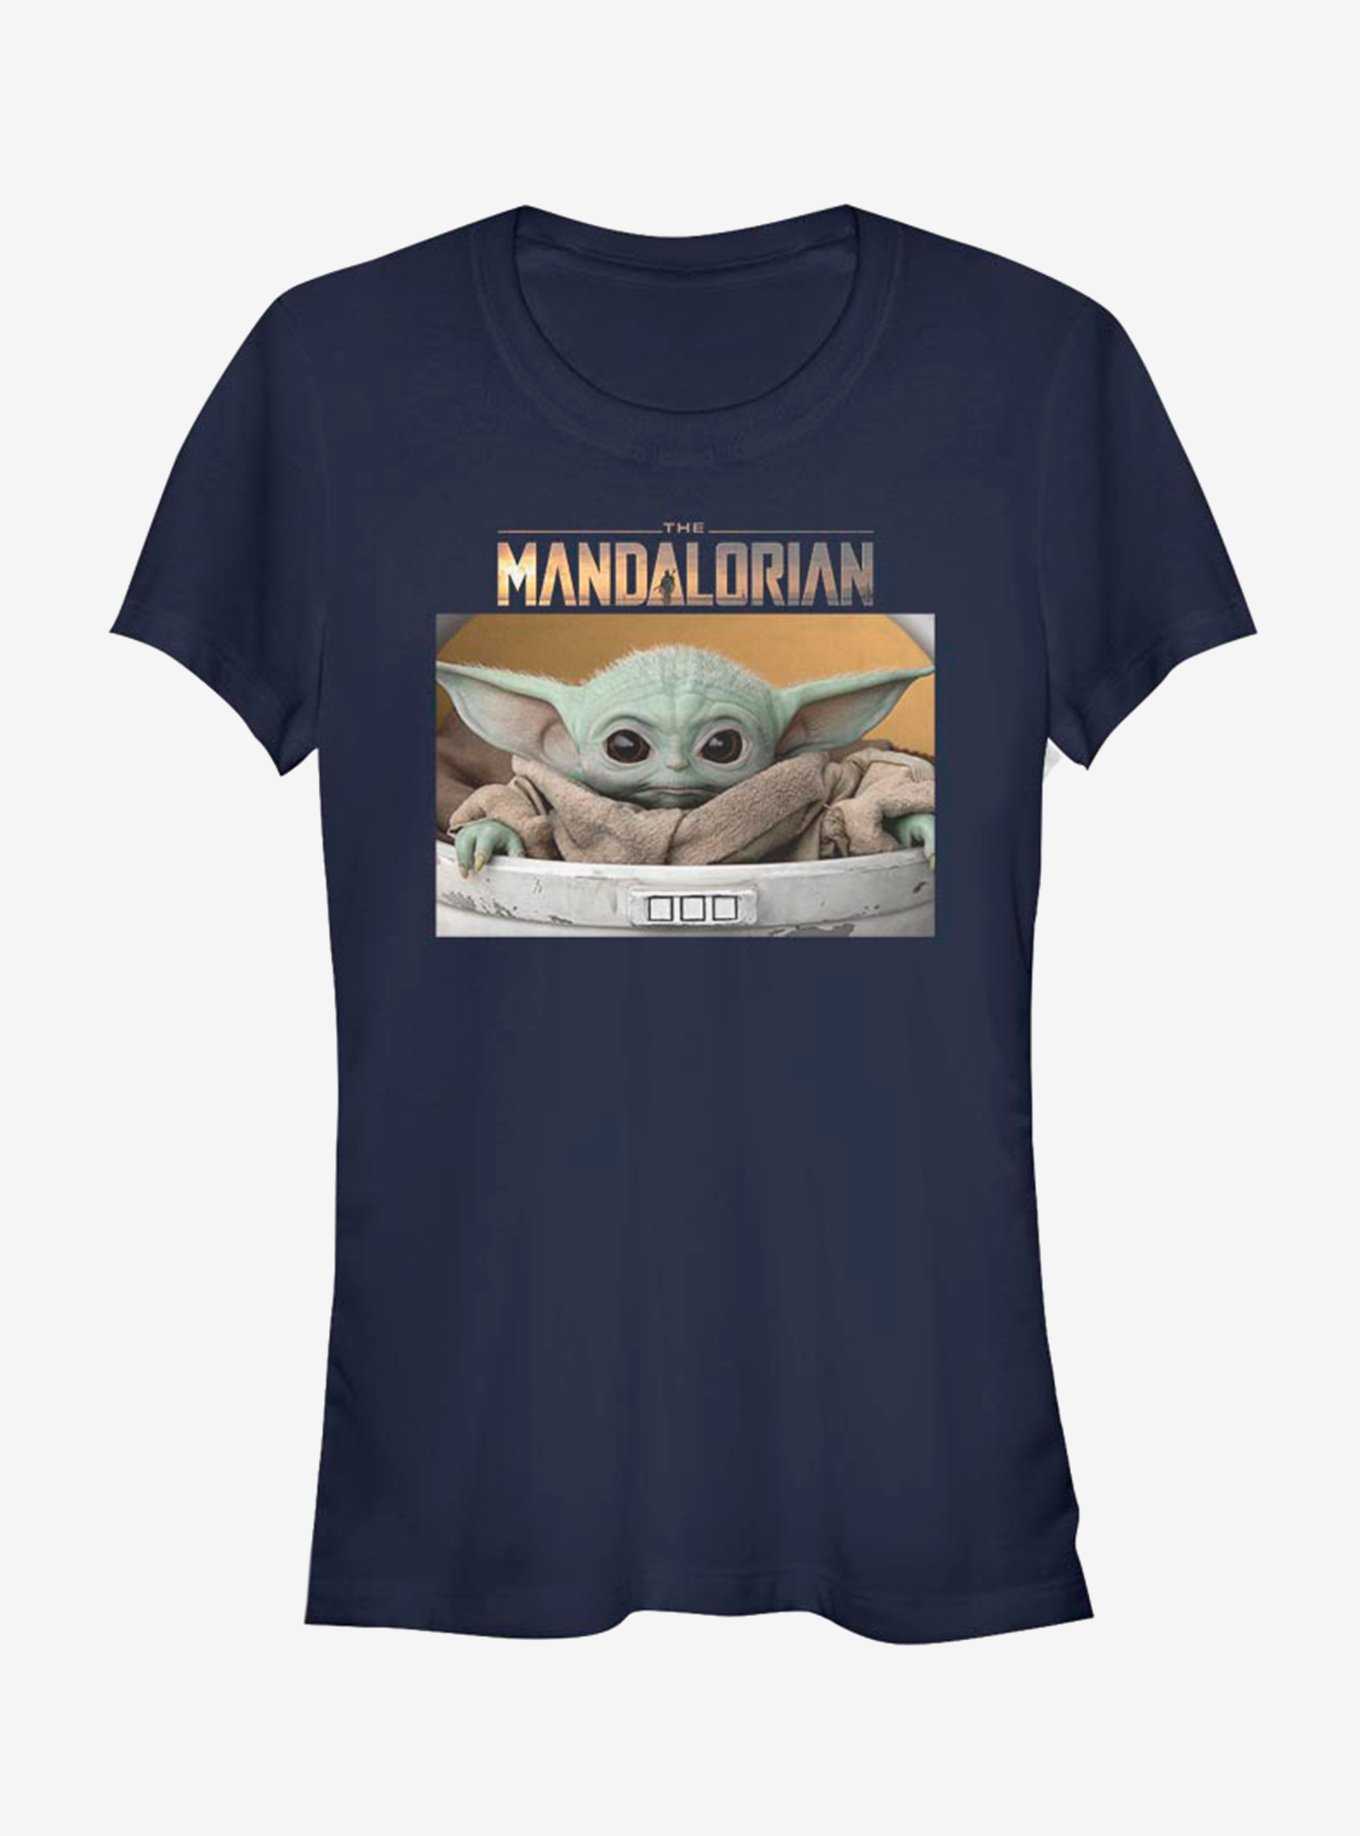 Star Wars The Mandalorian The Child Small Box Girls T-Shirt, , hi-res